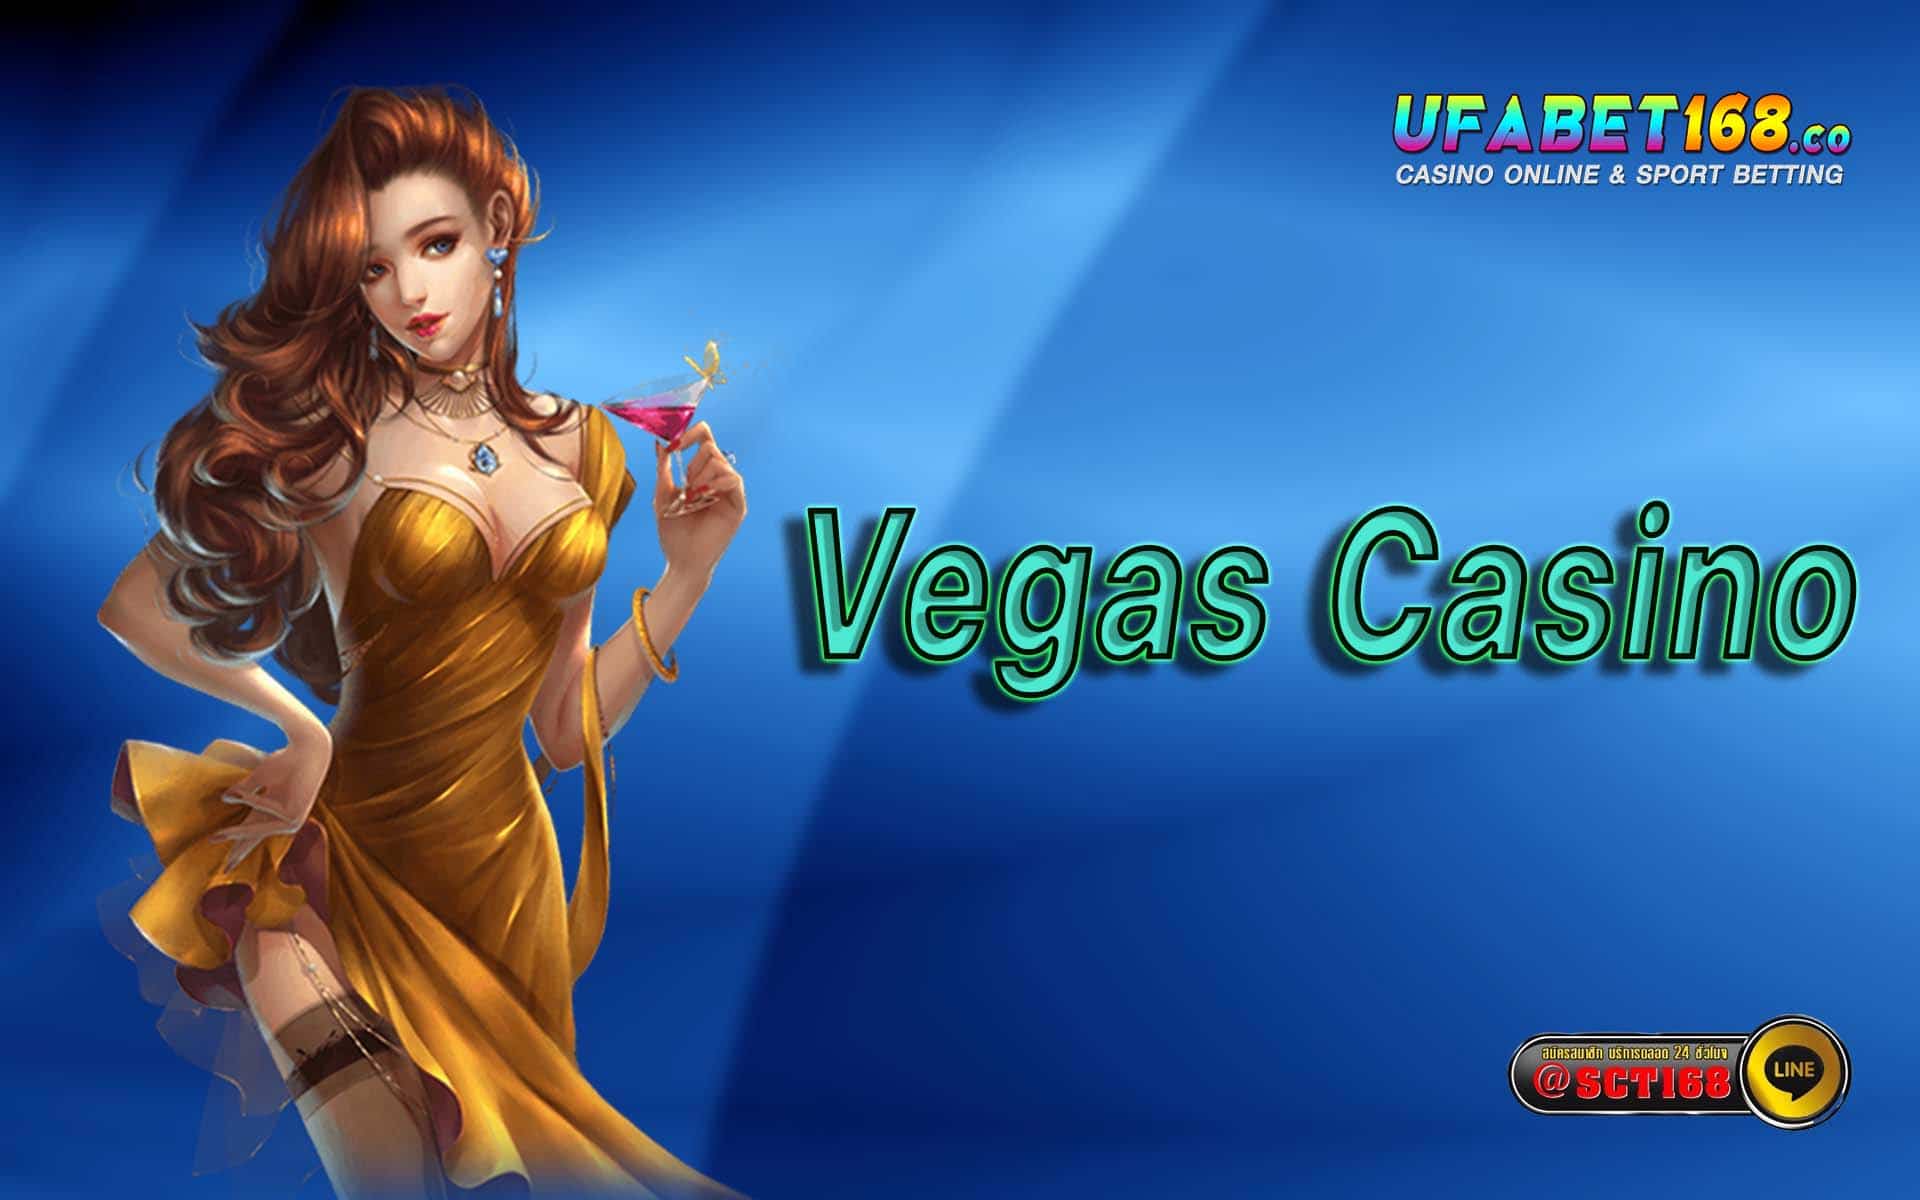 Vegas Casino ฟรีเครดิต